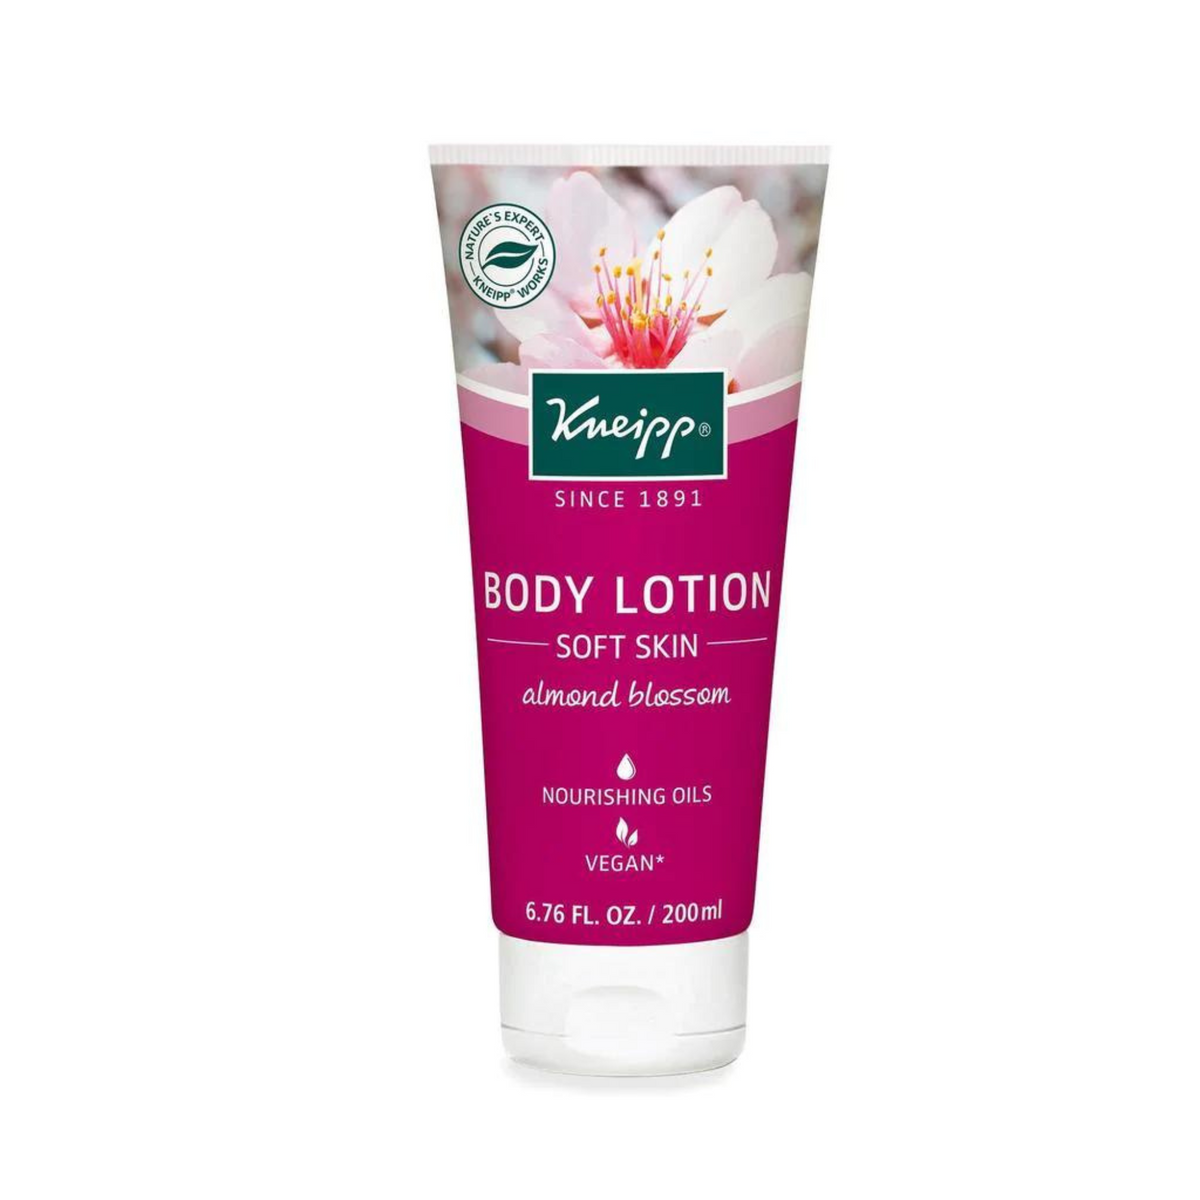 Primary Image of Kneipp Almond Blossom Soft Skin Body Lotion (6.76 fl oz)